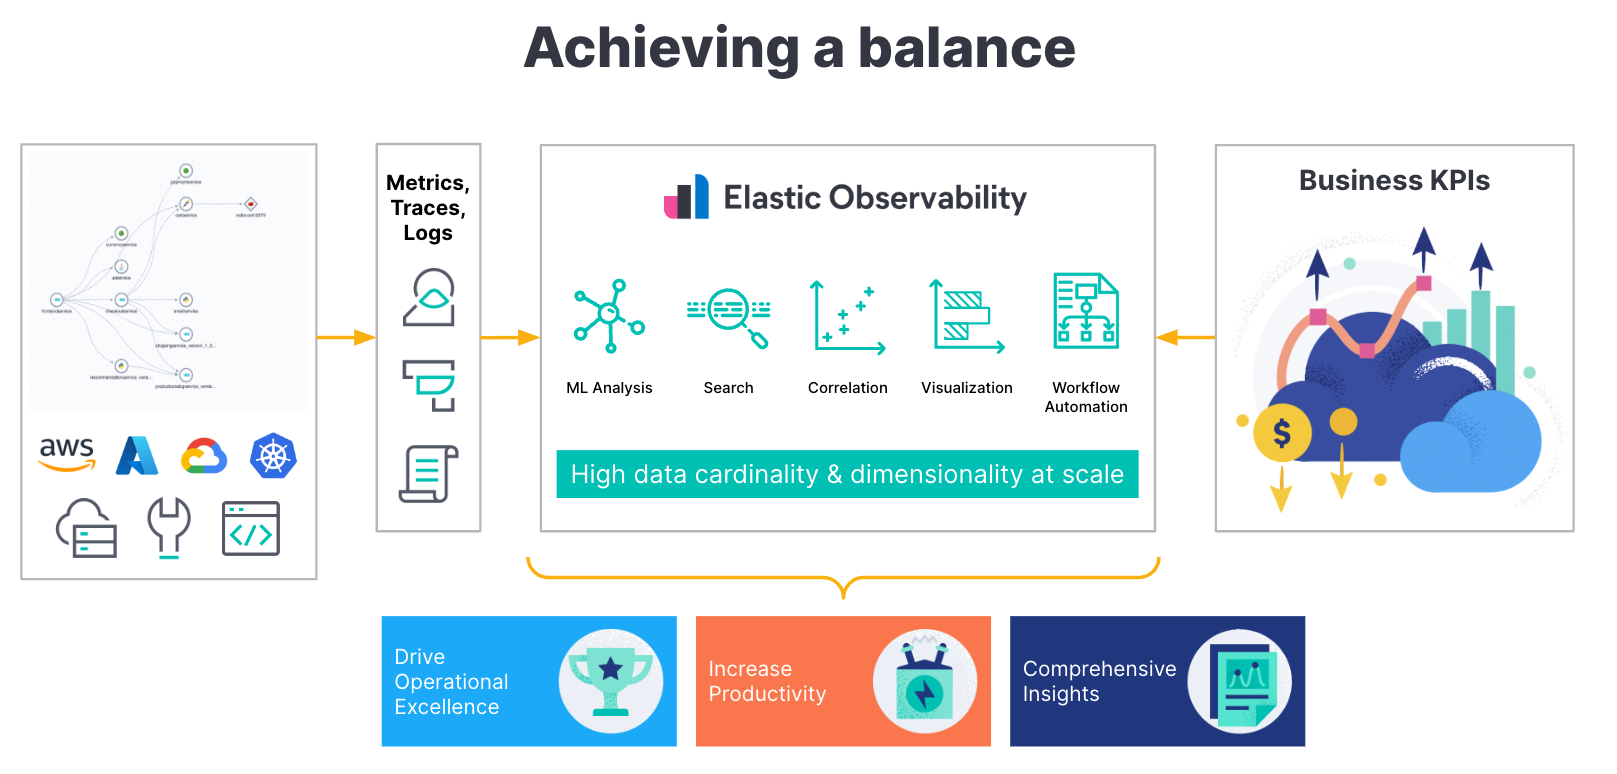 elastic observability achieving a balance